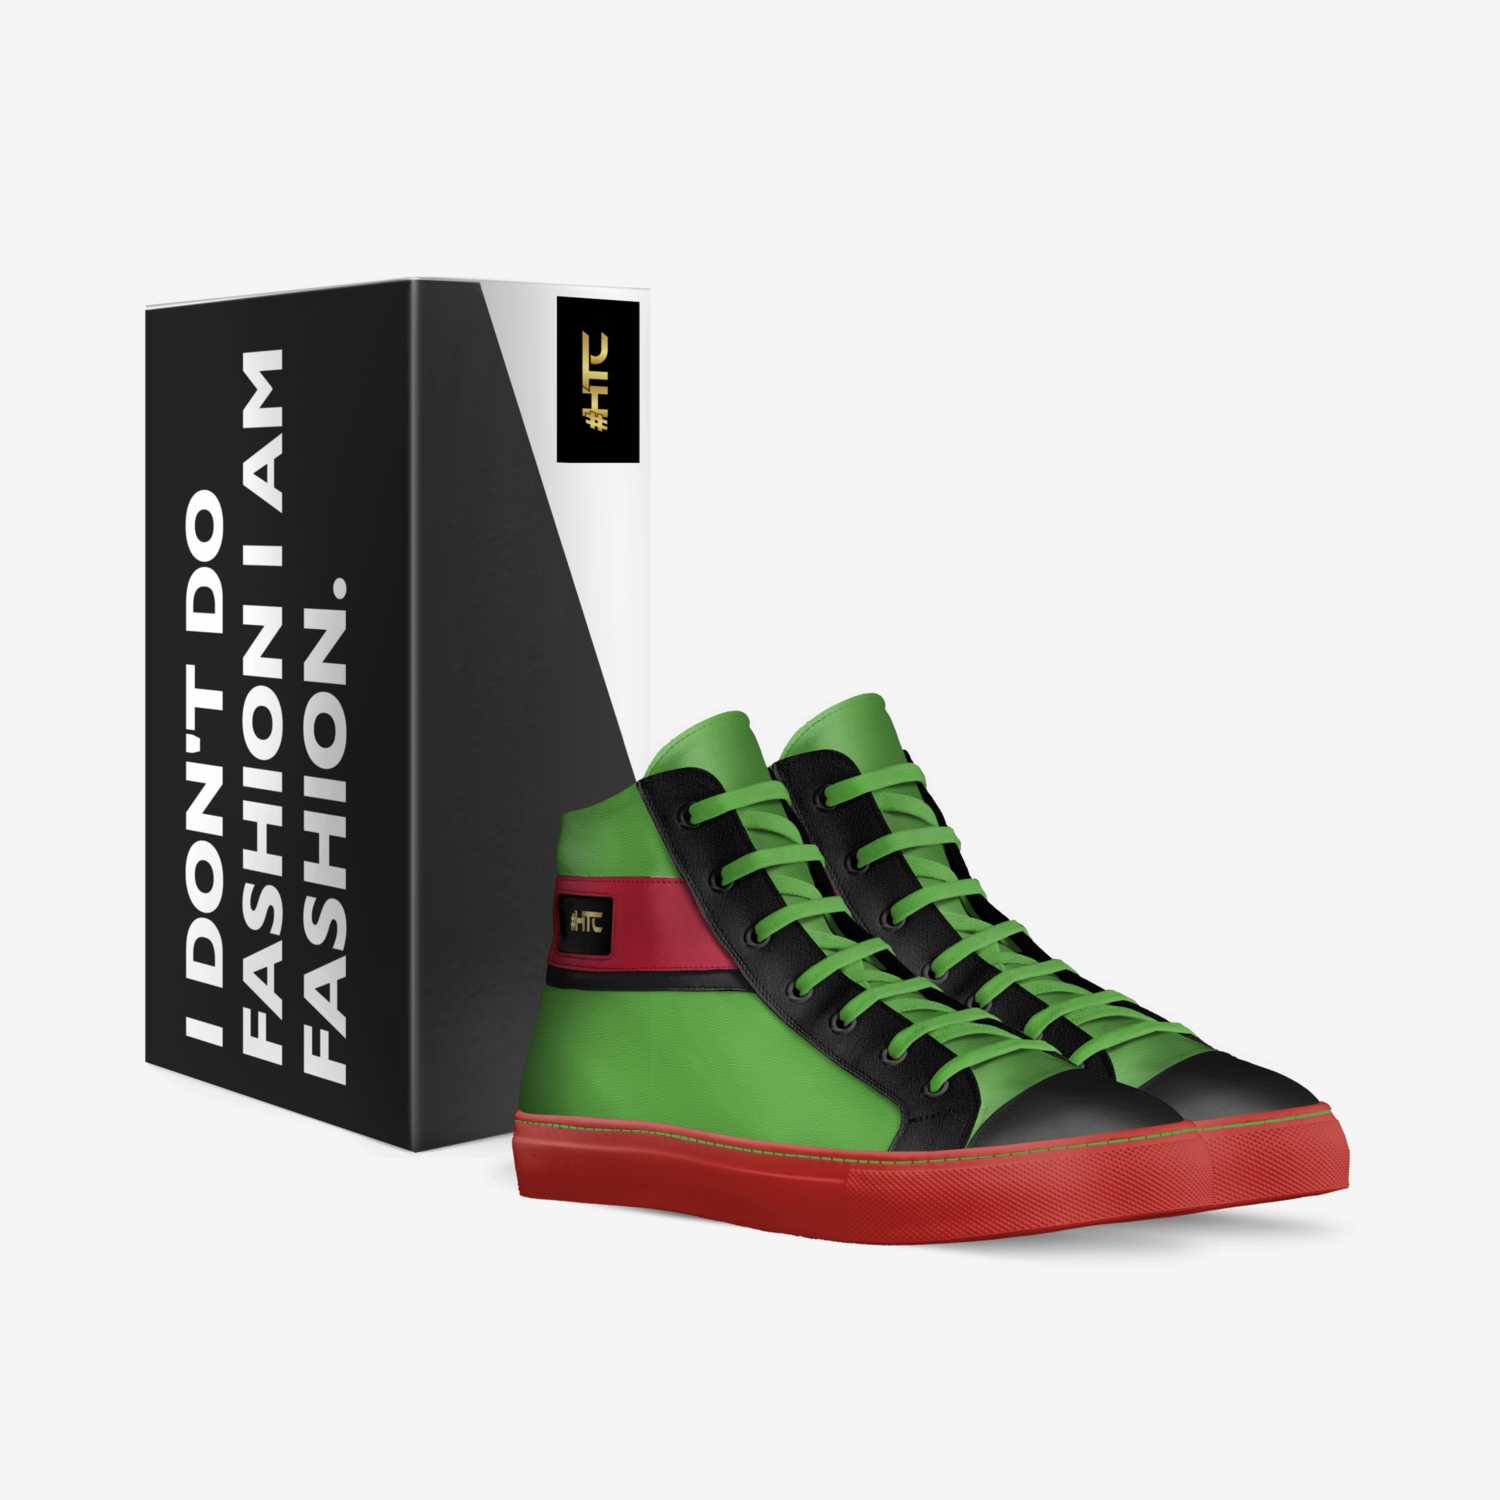 BFG  custom made in Italy shoes by John Barrett | Box view